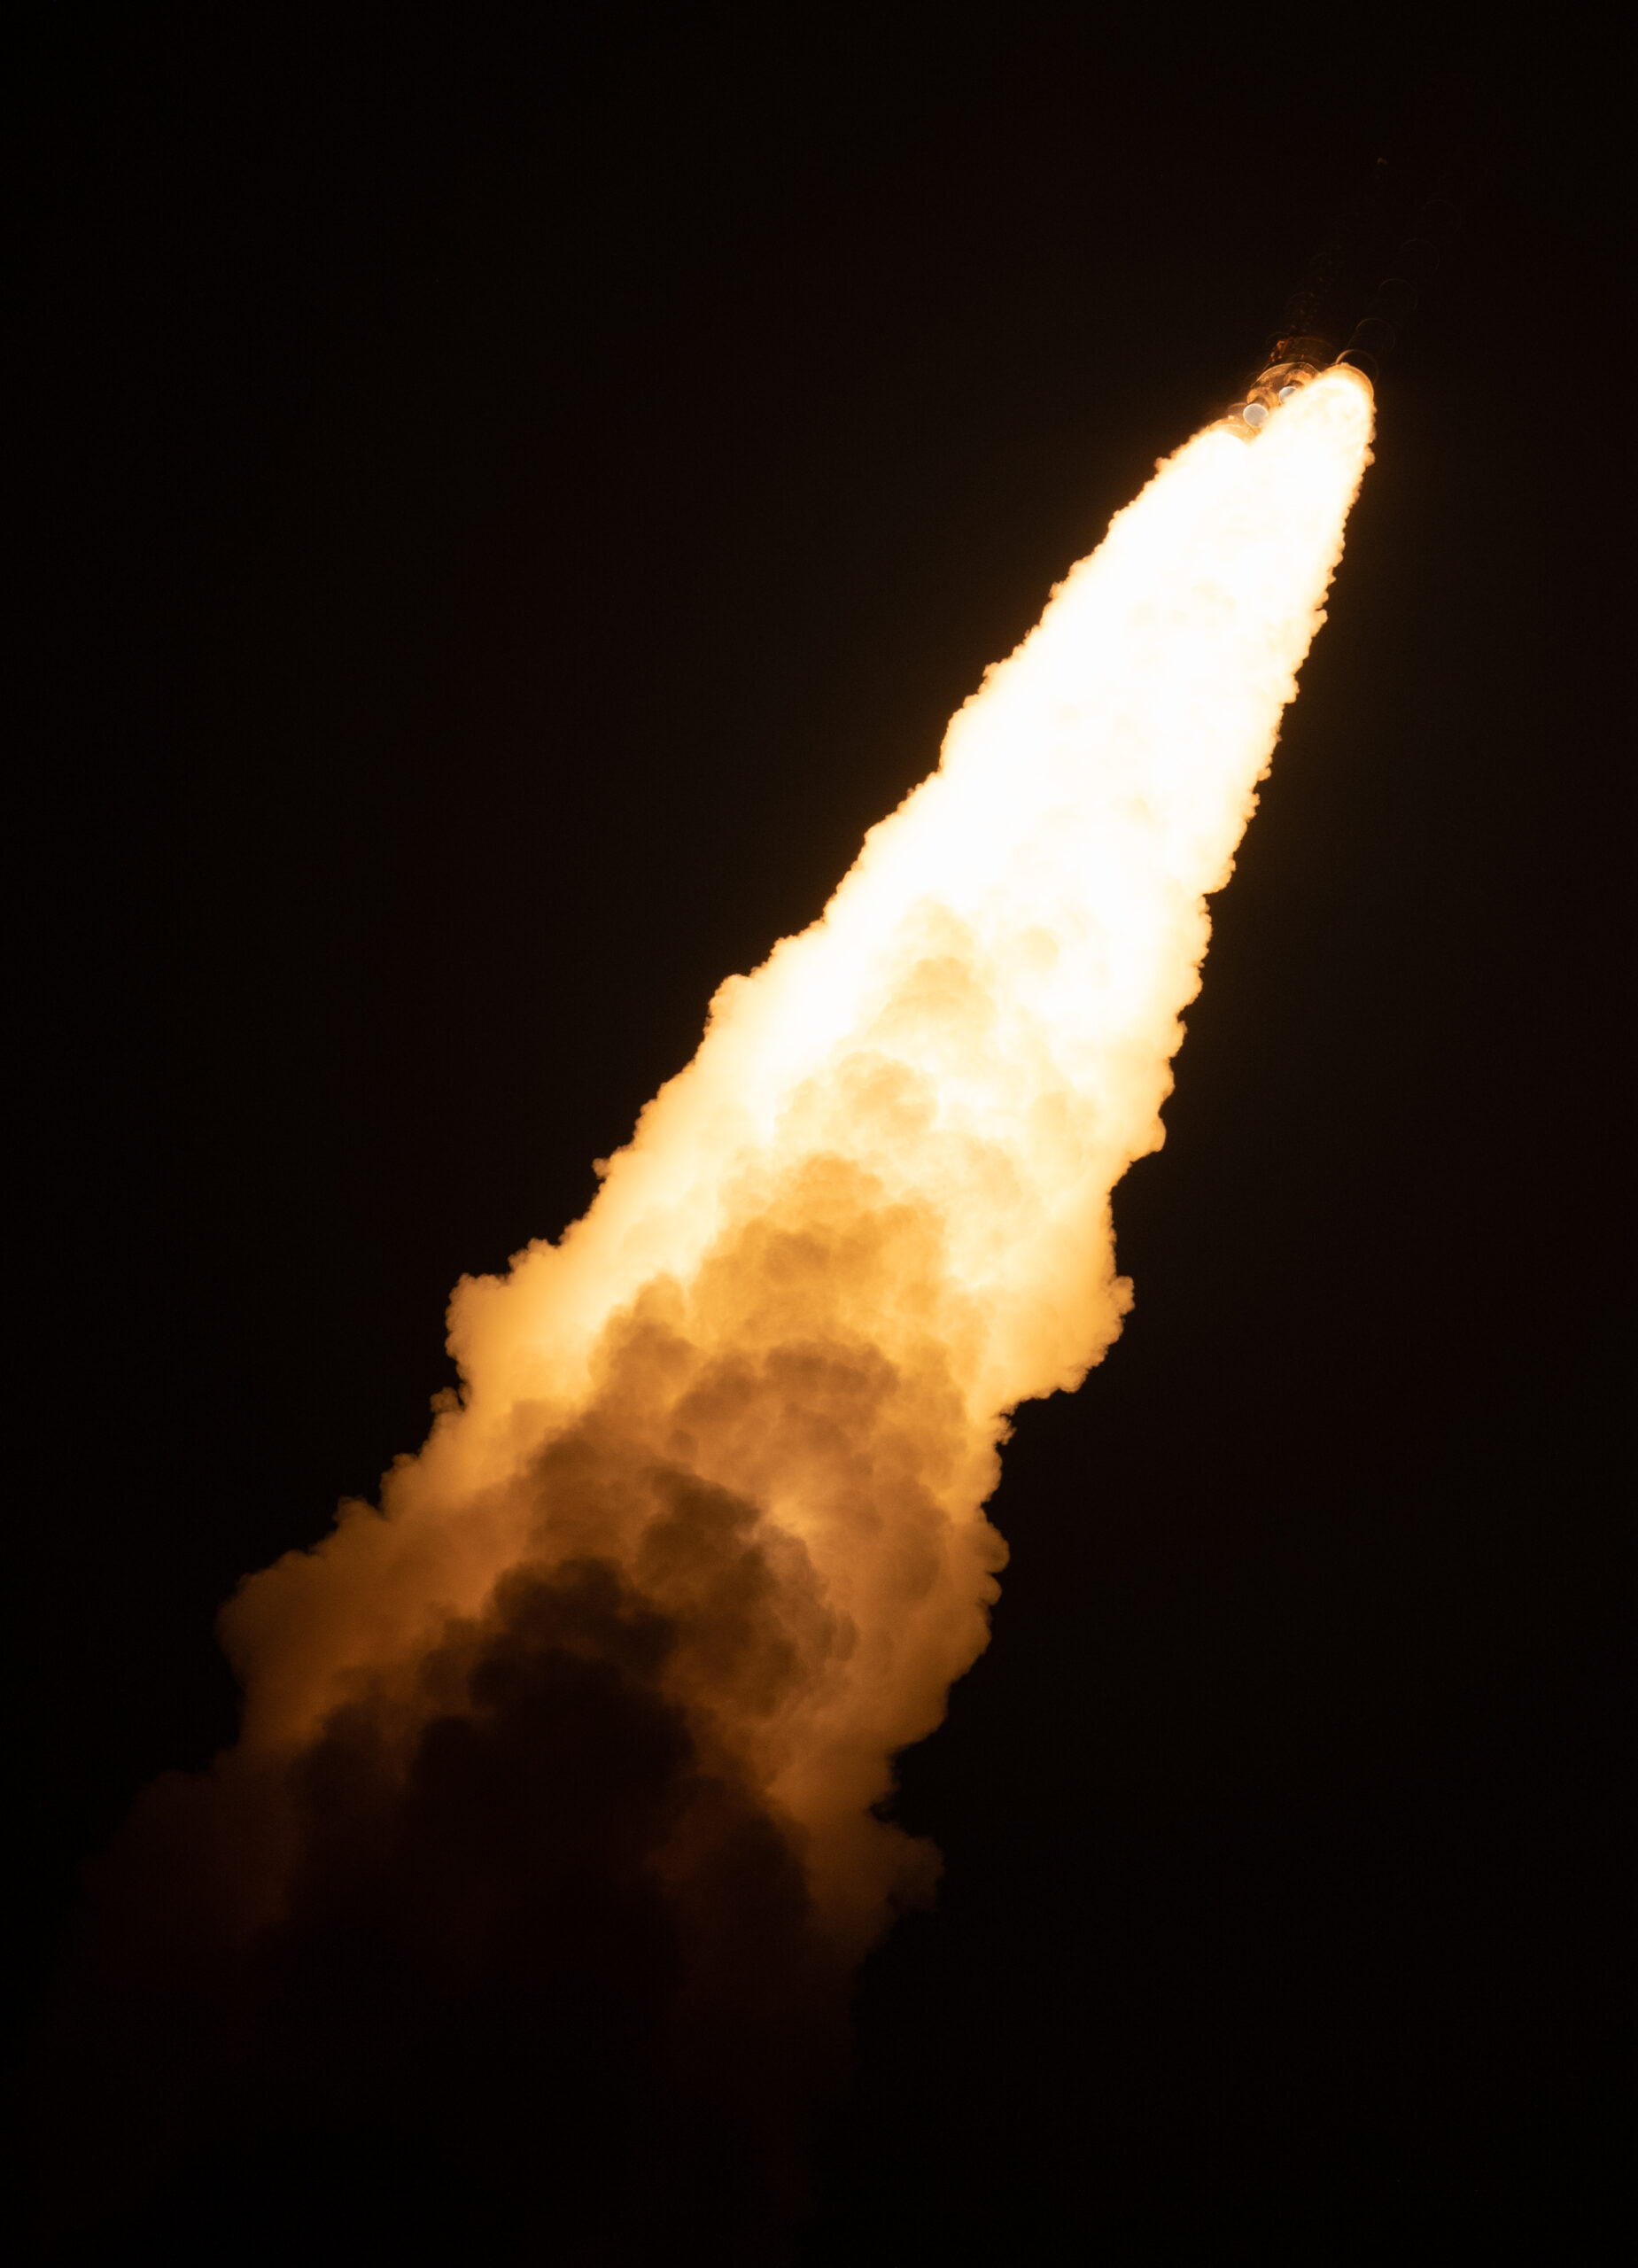 massive rocket plume of sls artemis rocket during nighttime launch